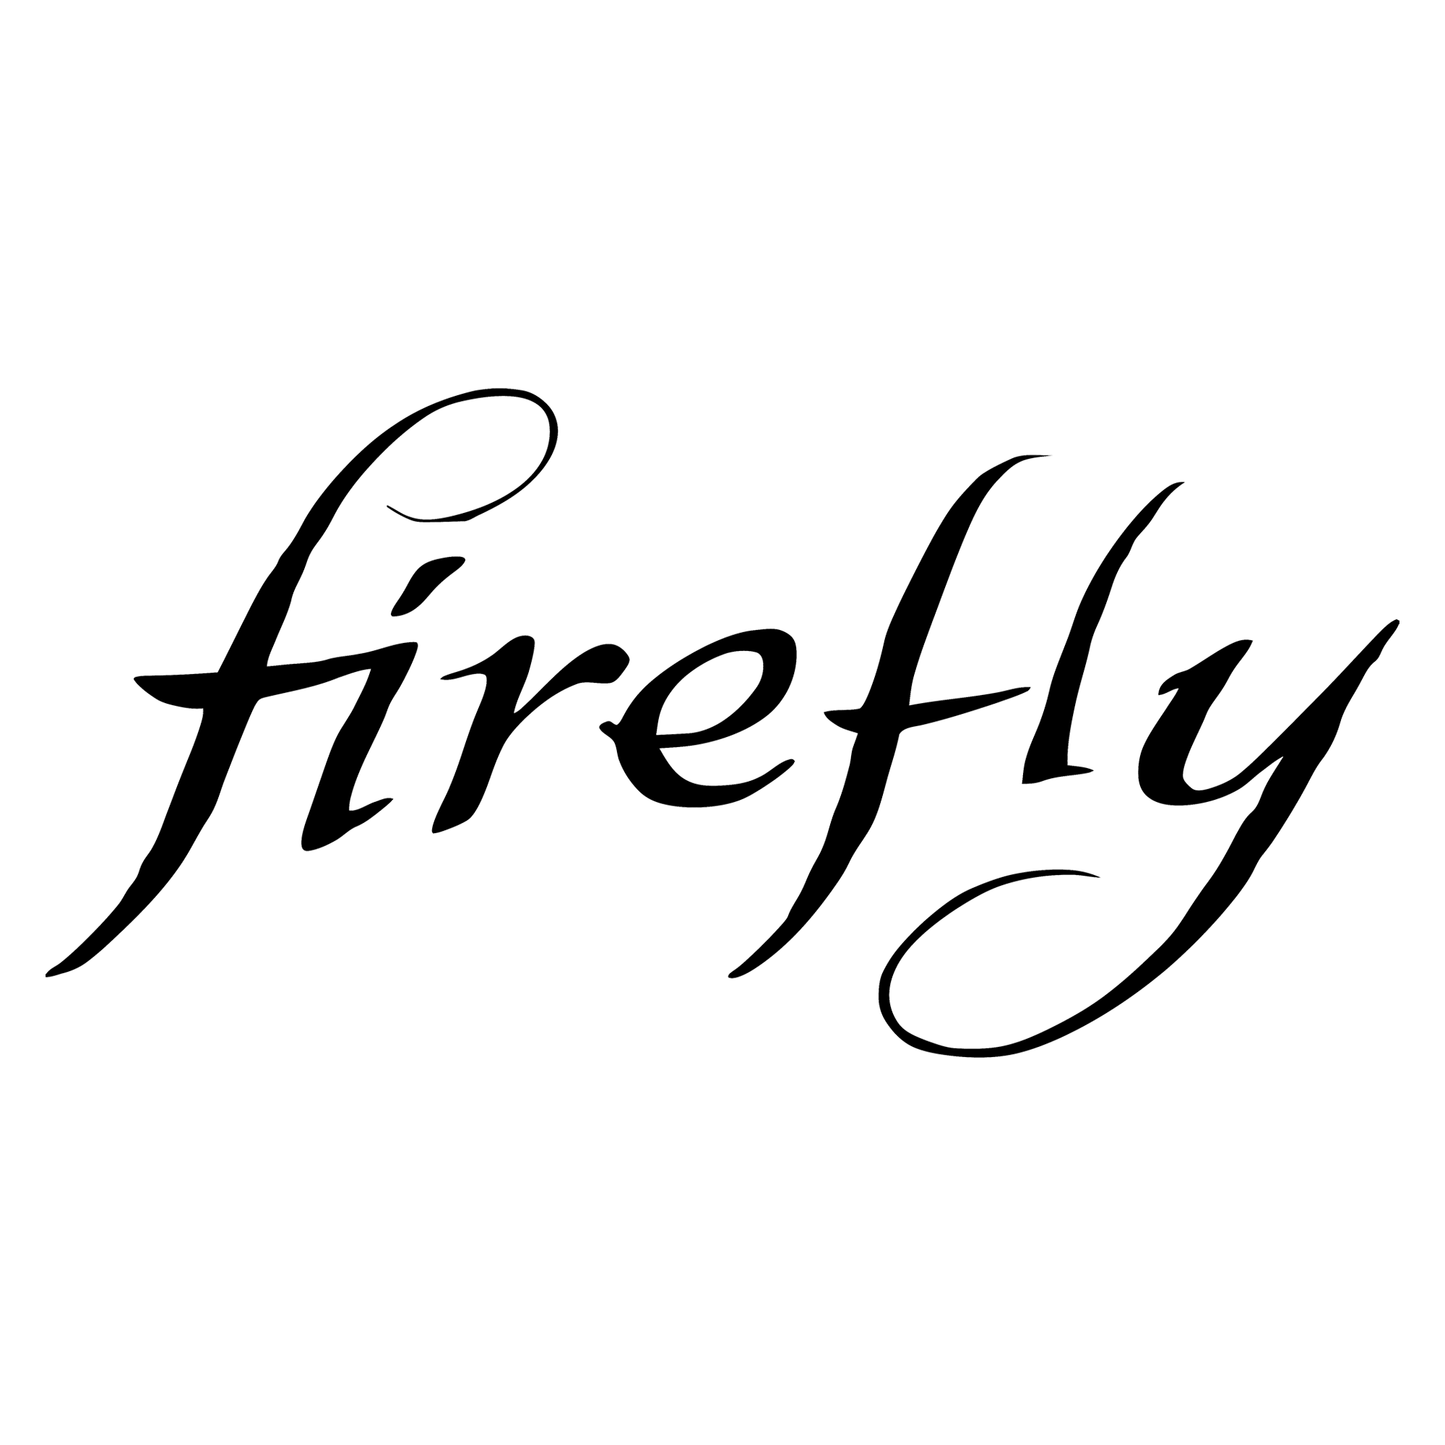 Firefly Vinyl Decal Sticker